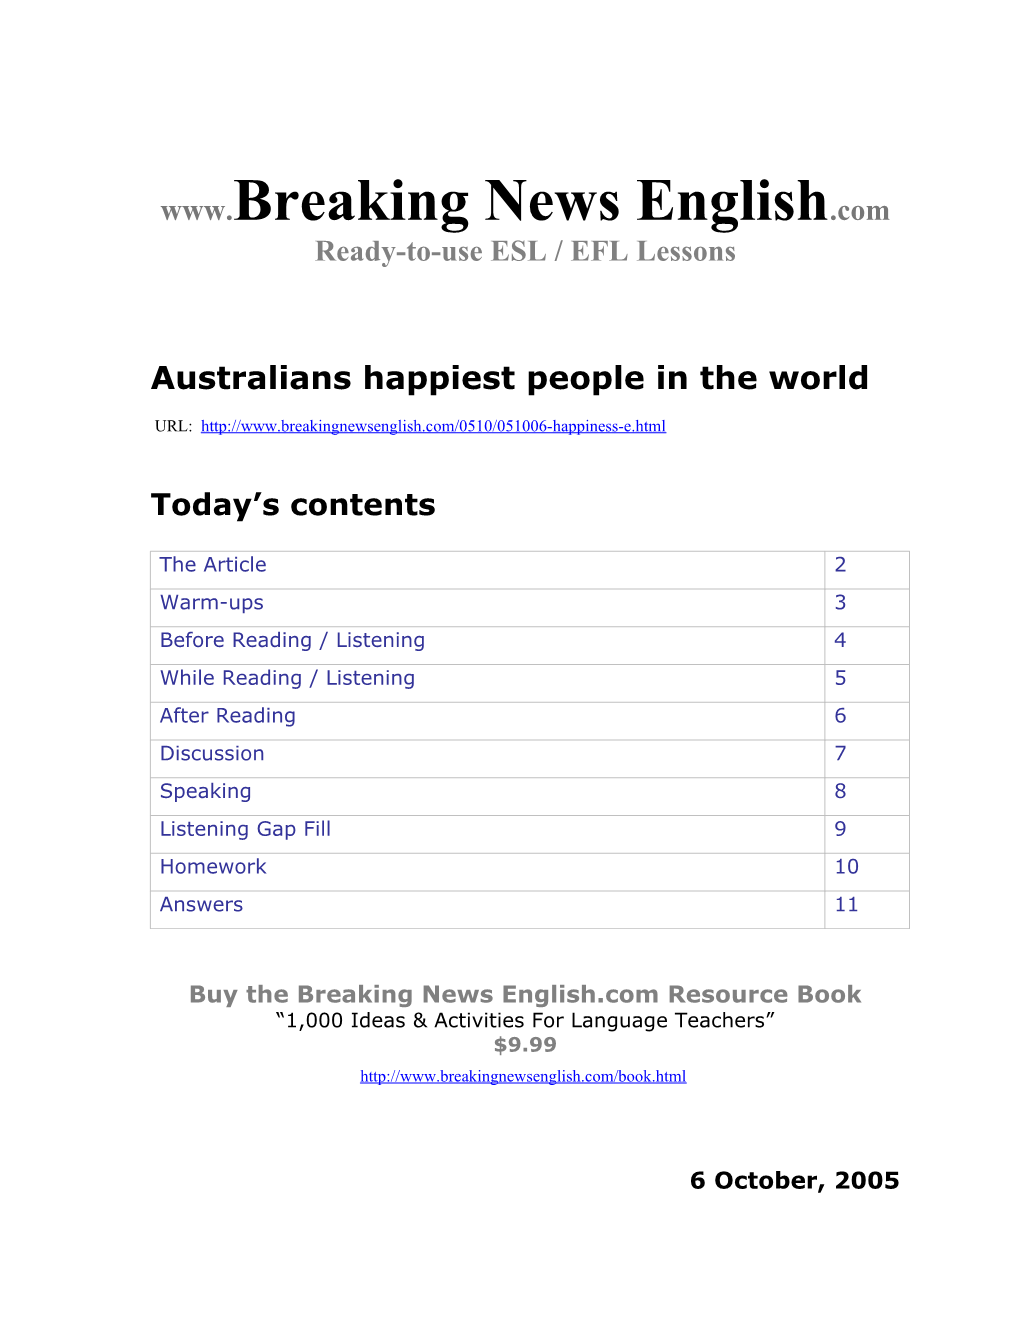 Australians Happiest People in the World